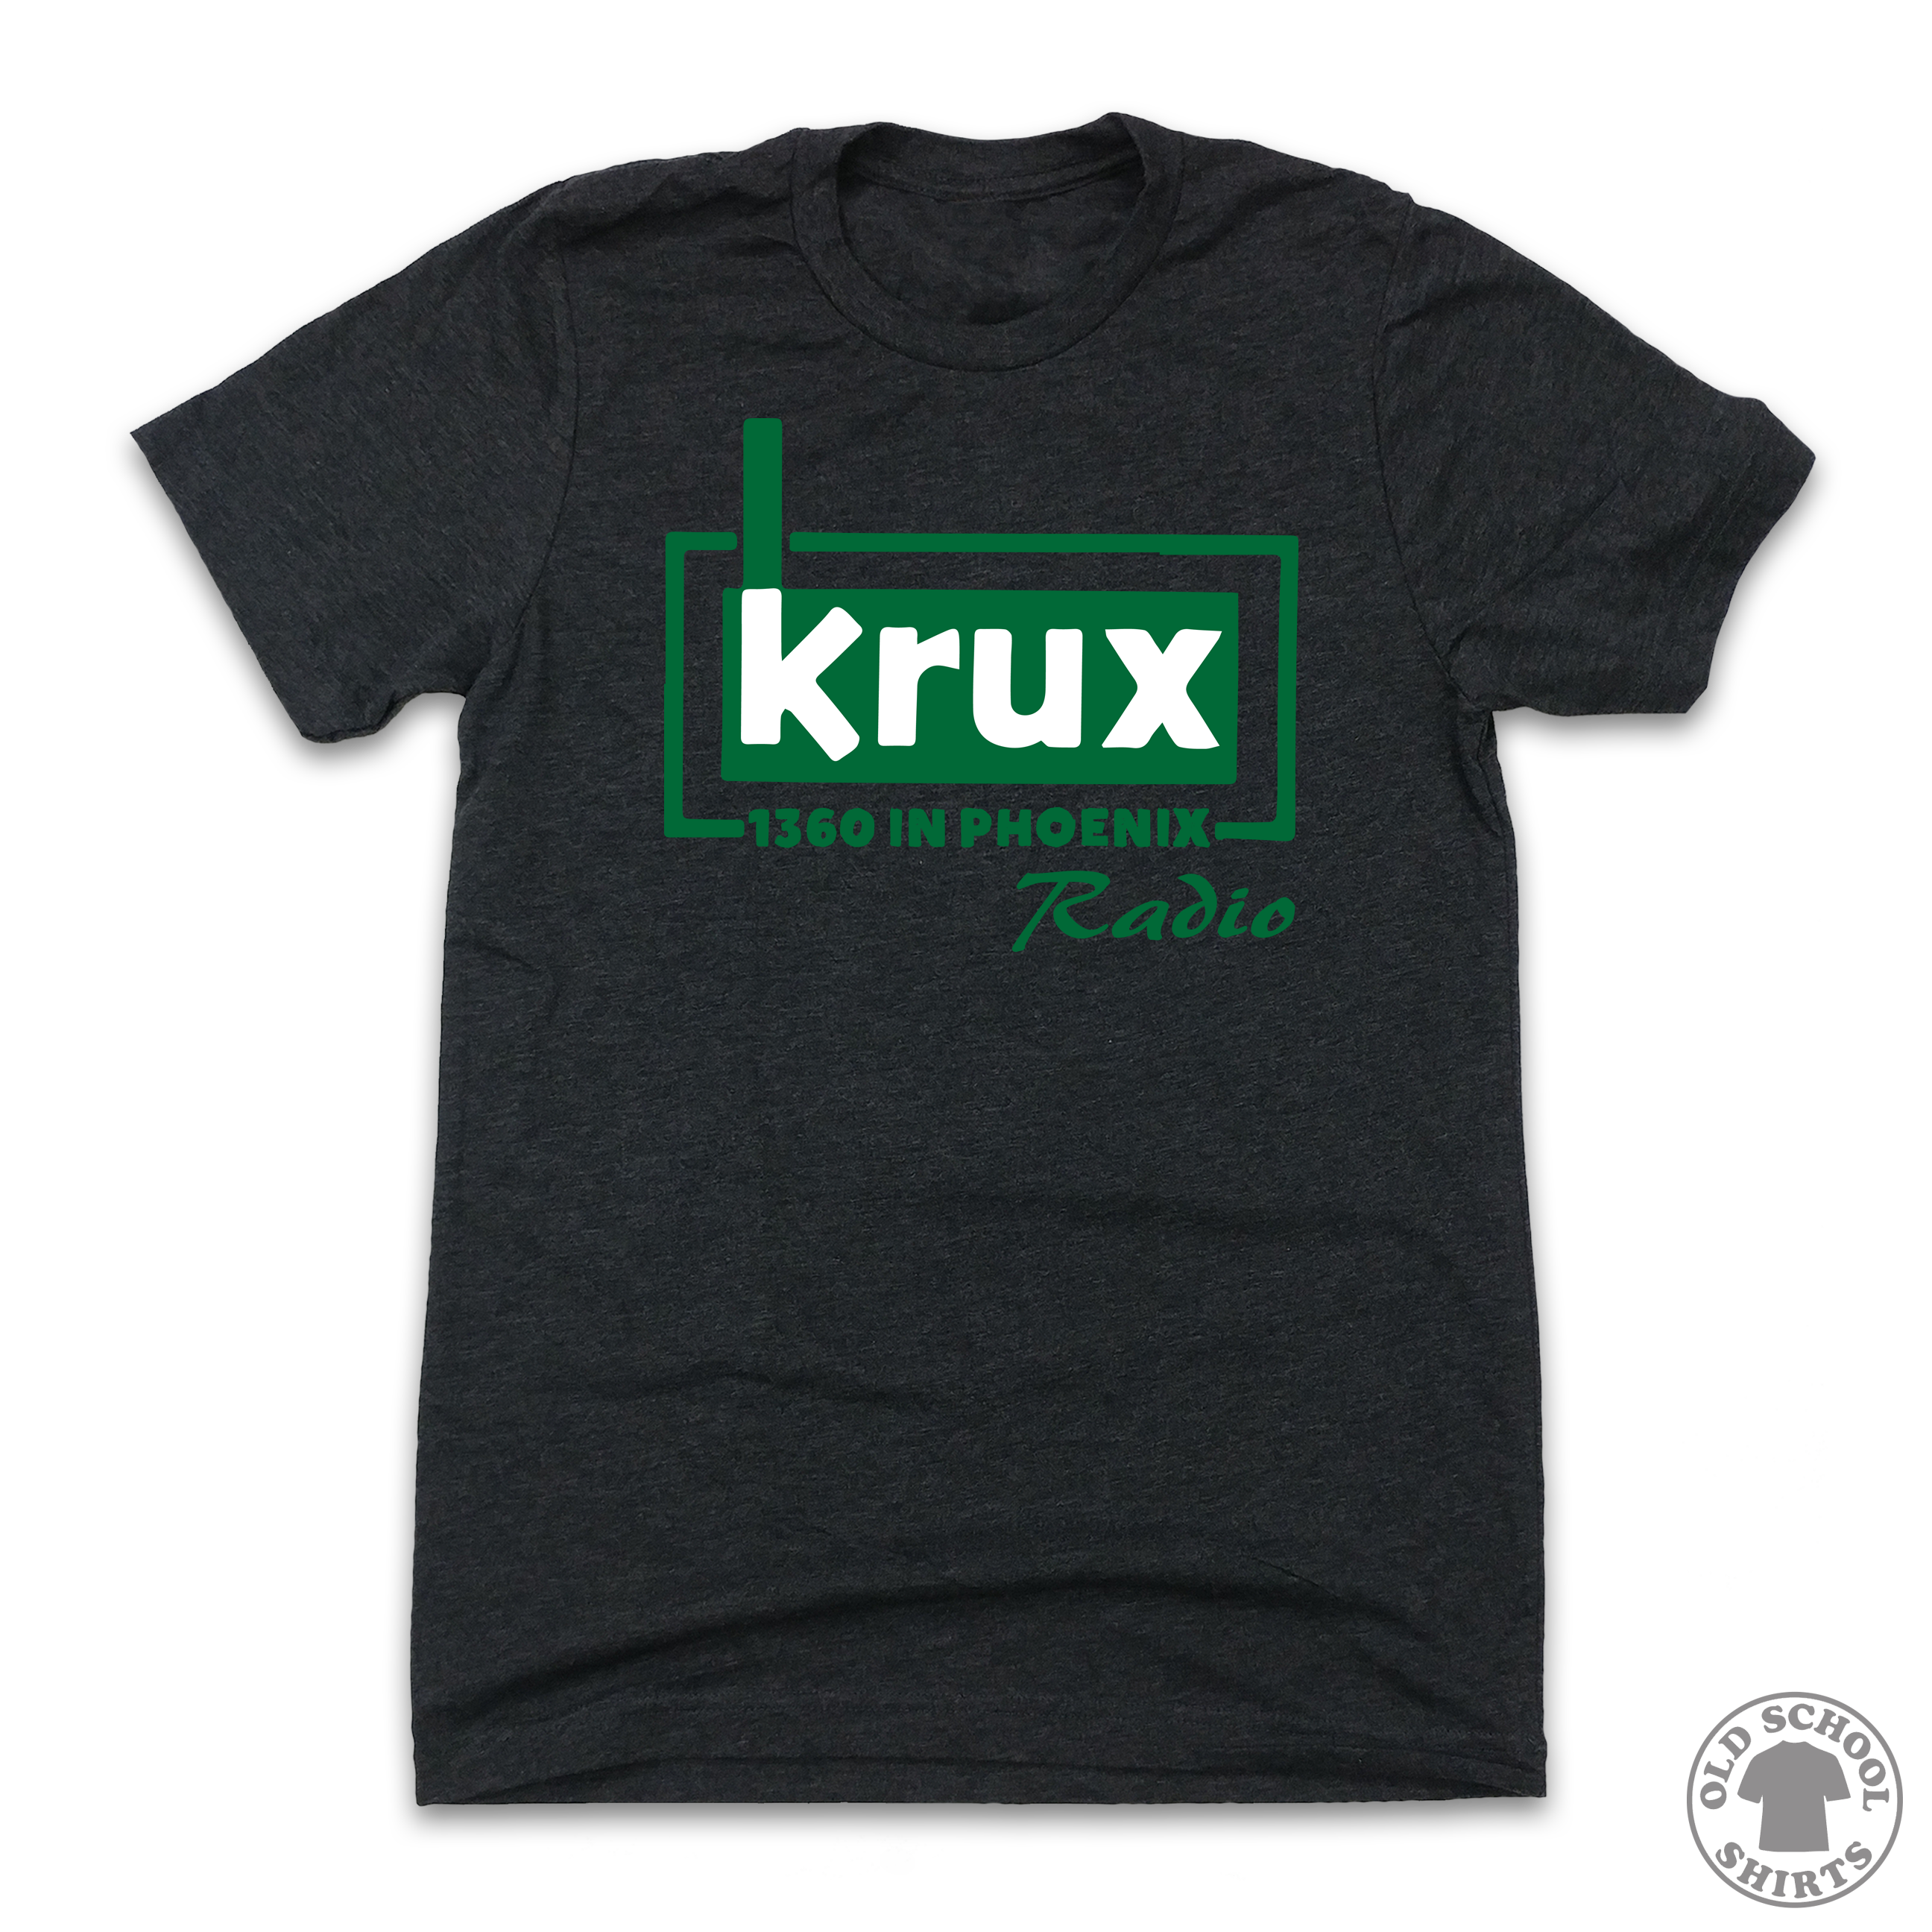 KRUX Radio - Old School Shirts- Retro Sports T Shirts